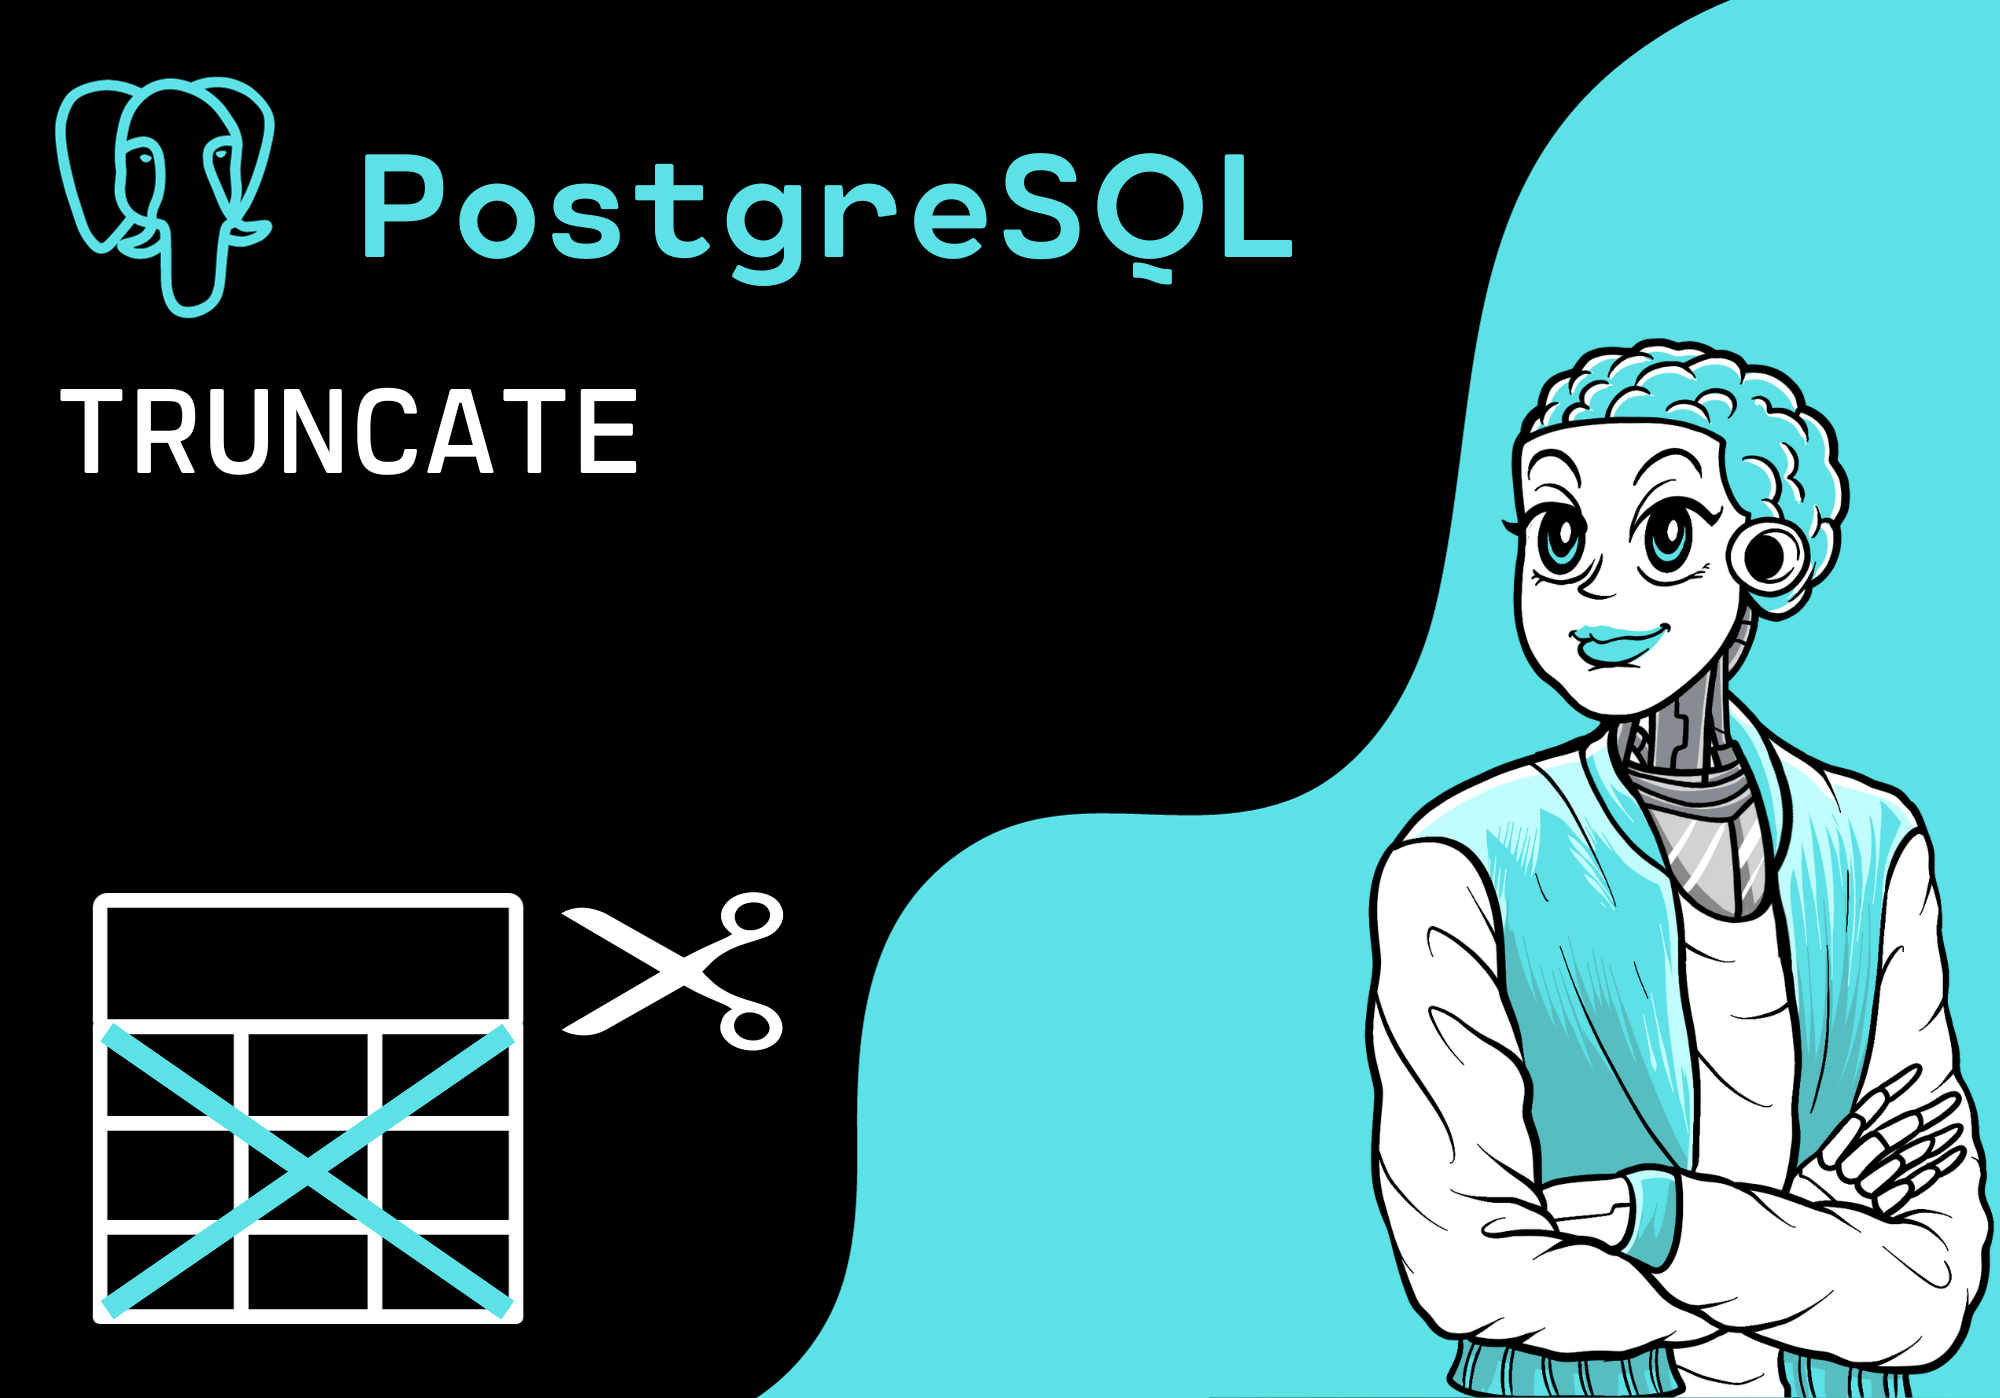 PostgreSQL - TRUNCATE